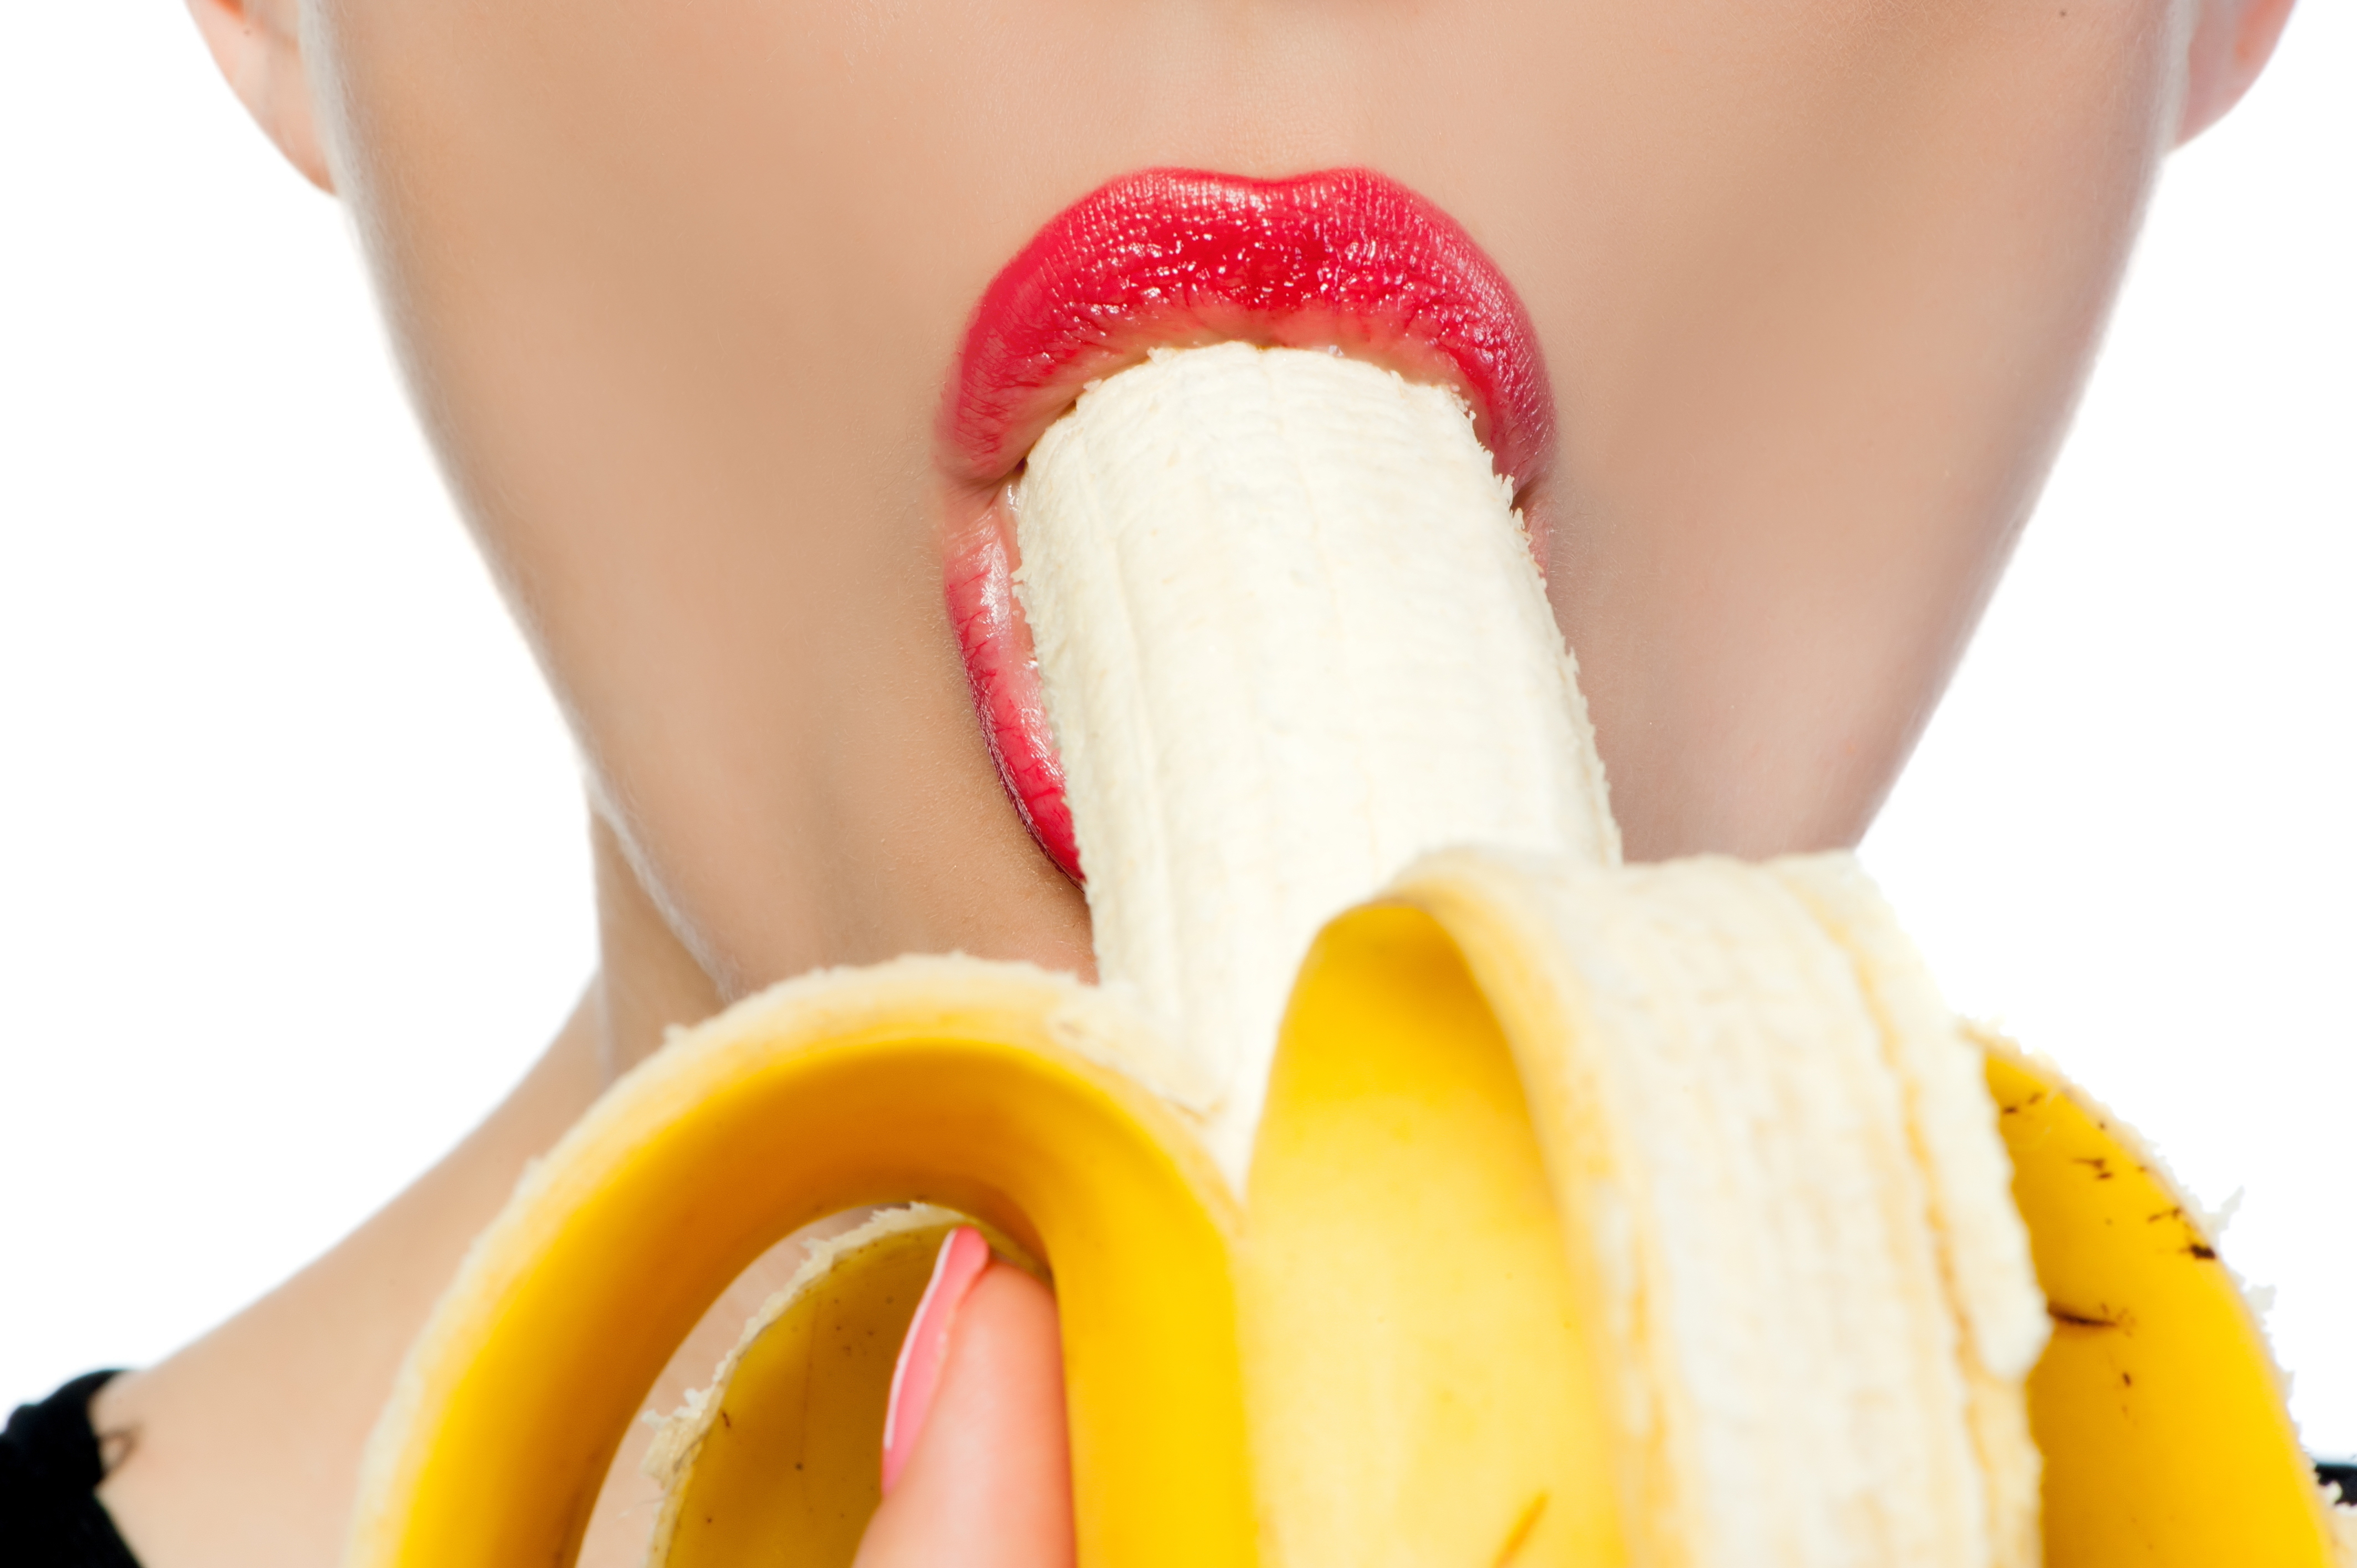 Техники отсоса. Девушка с бананом. Девушка с бананом во рту. Девушка ест банан. Фотосессия с бананом.